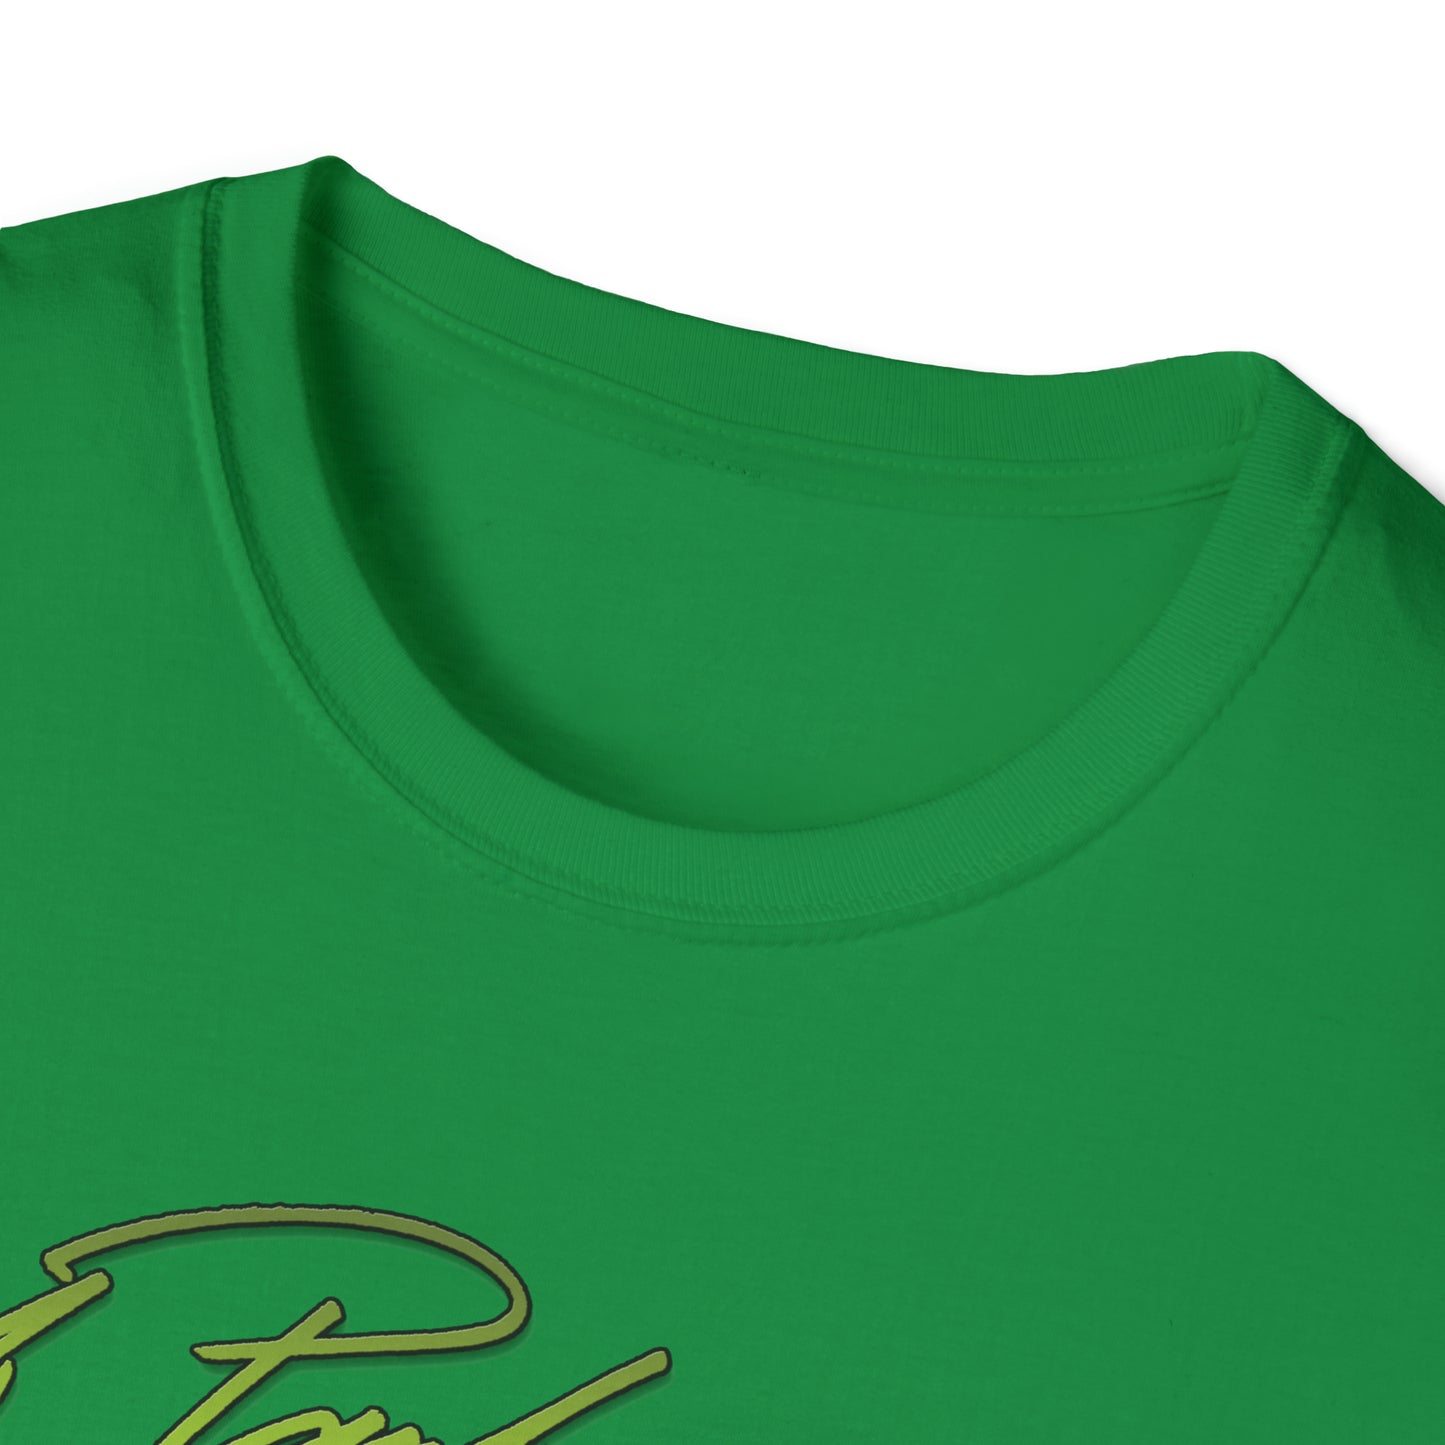 TEENAGE MUTANT NINJA TURTLE VAN Rob Paulsen Signature Unisex Softstyle T-Shirt